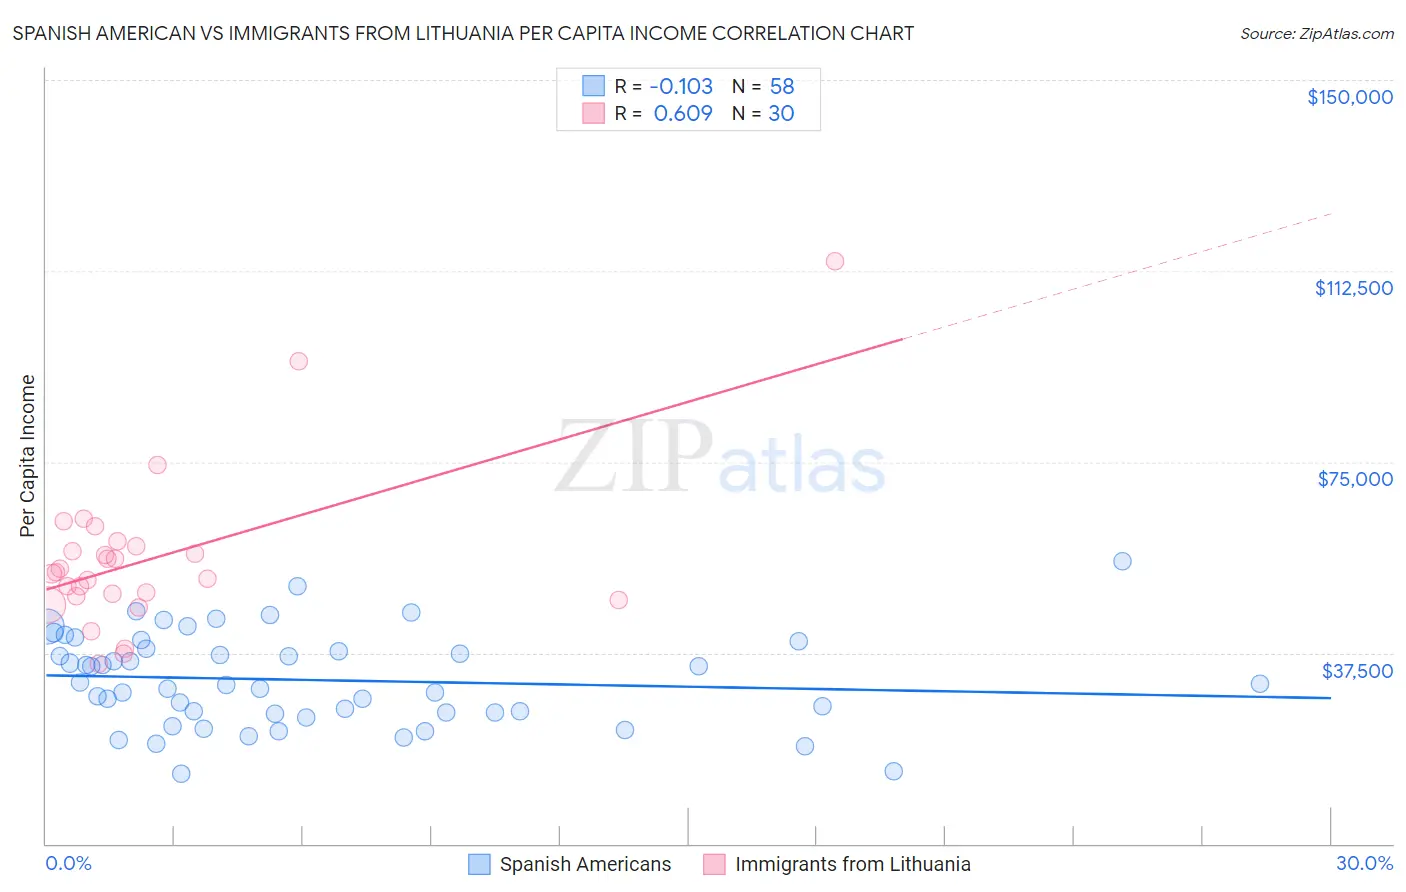 Spanish American vs Immigrants from Lithuania Per Capita Income